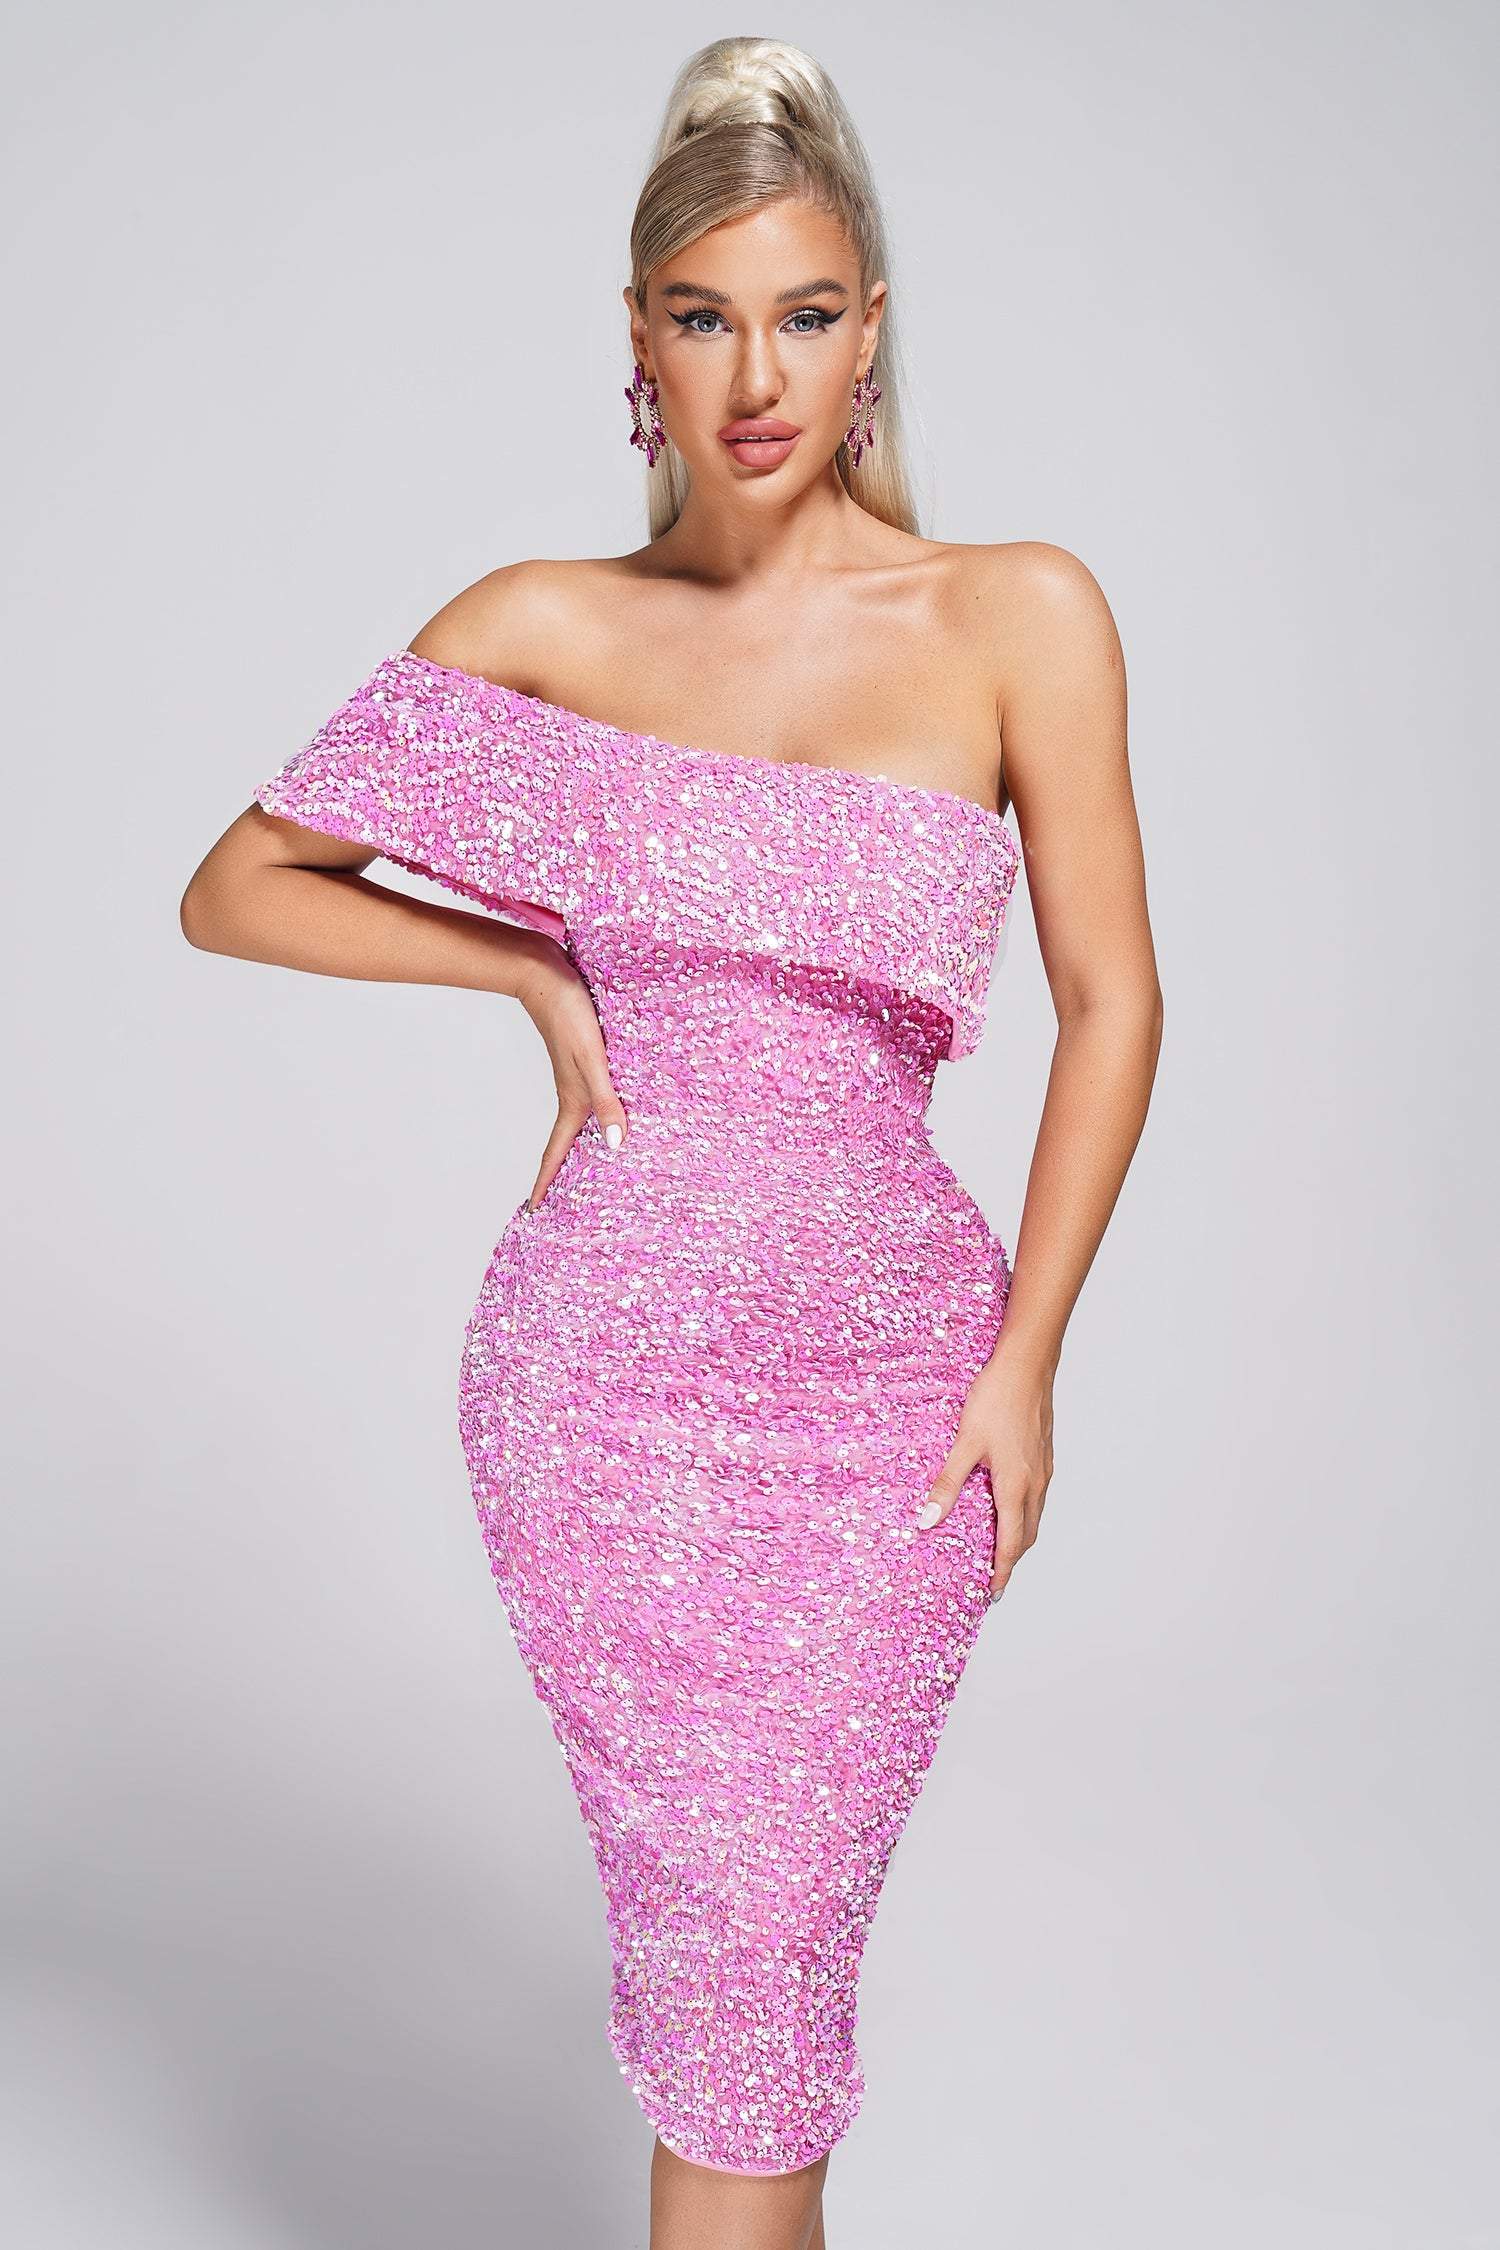 Giaga Purple One Shoulder Sequin Midi Dress - Pink